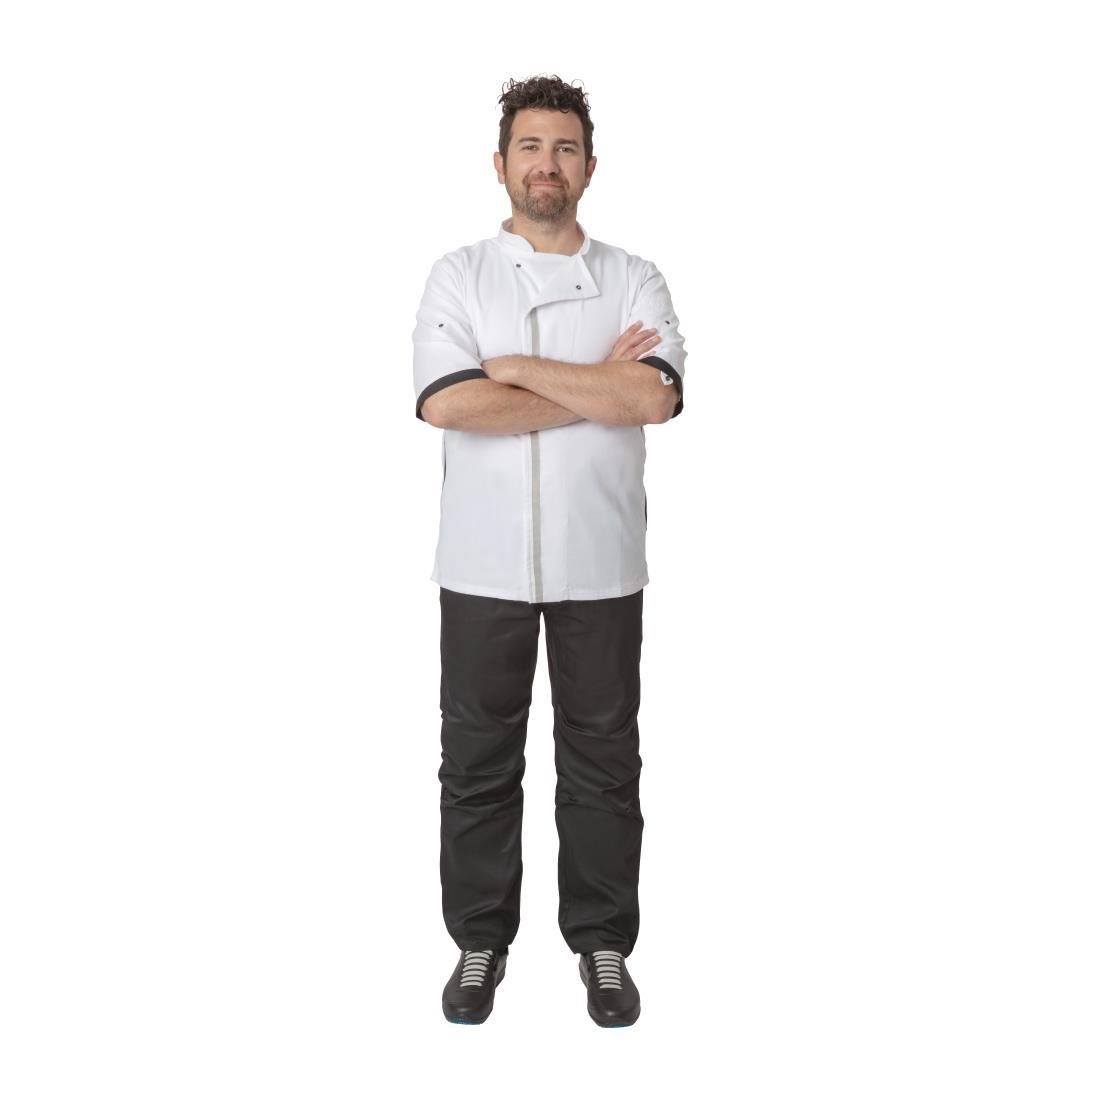 Southside Unisex Chefs Jacket Short Sleeve White XL - B998-XL  - 2